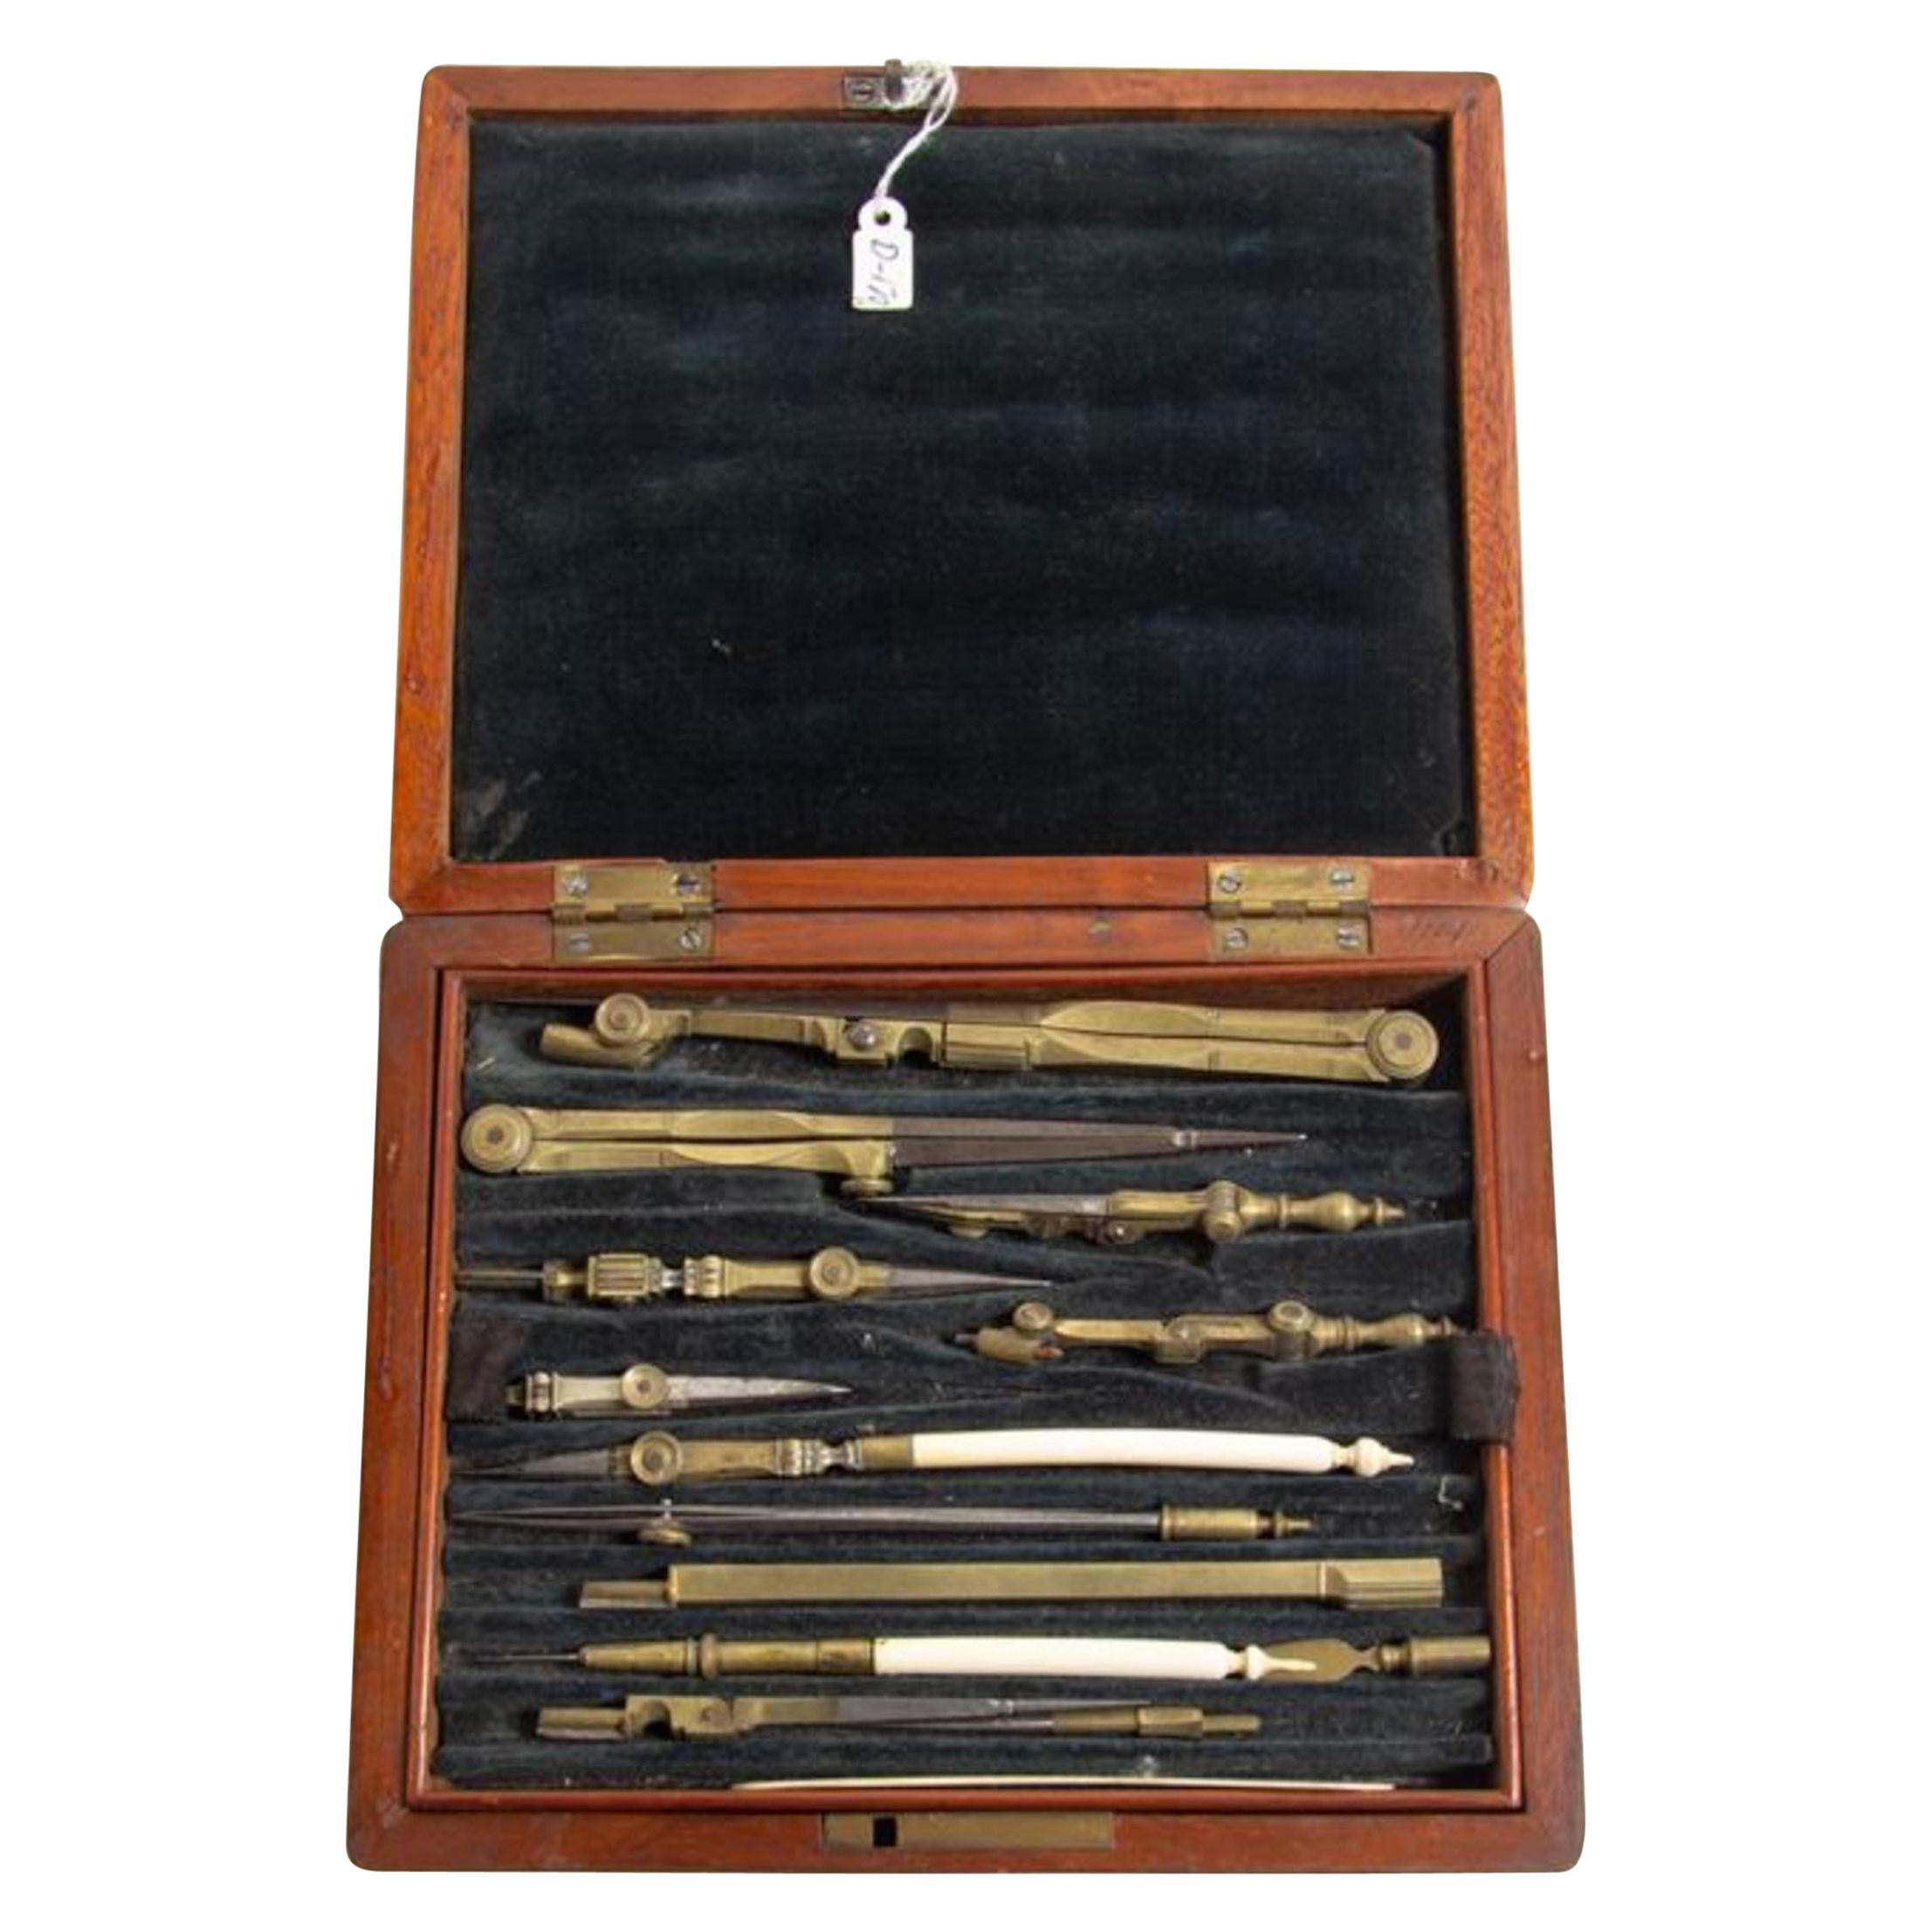 19th Century English Cased Drawing Set Length of Longest Tool